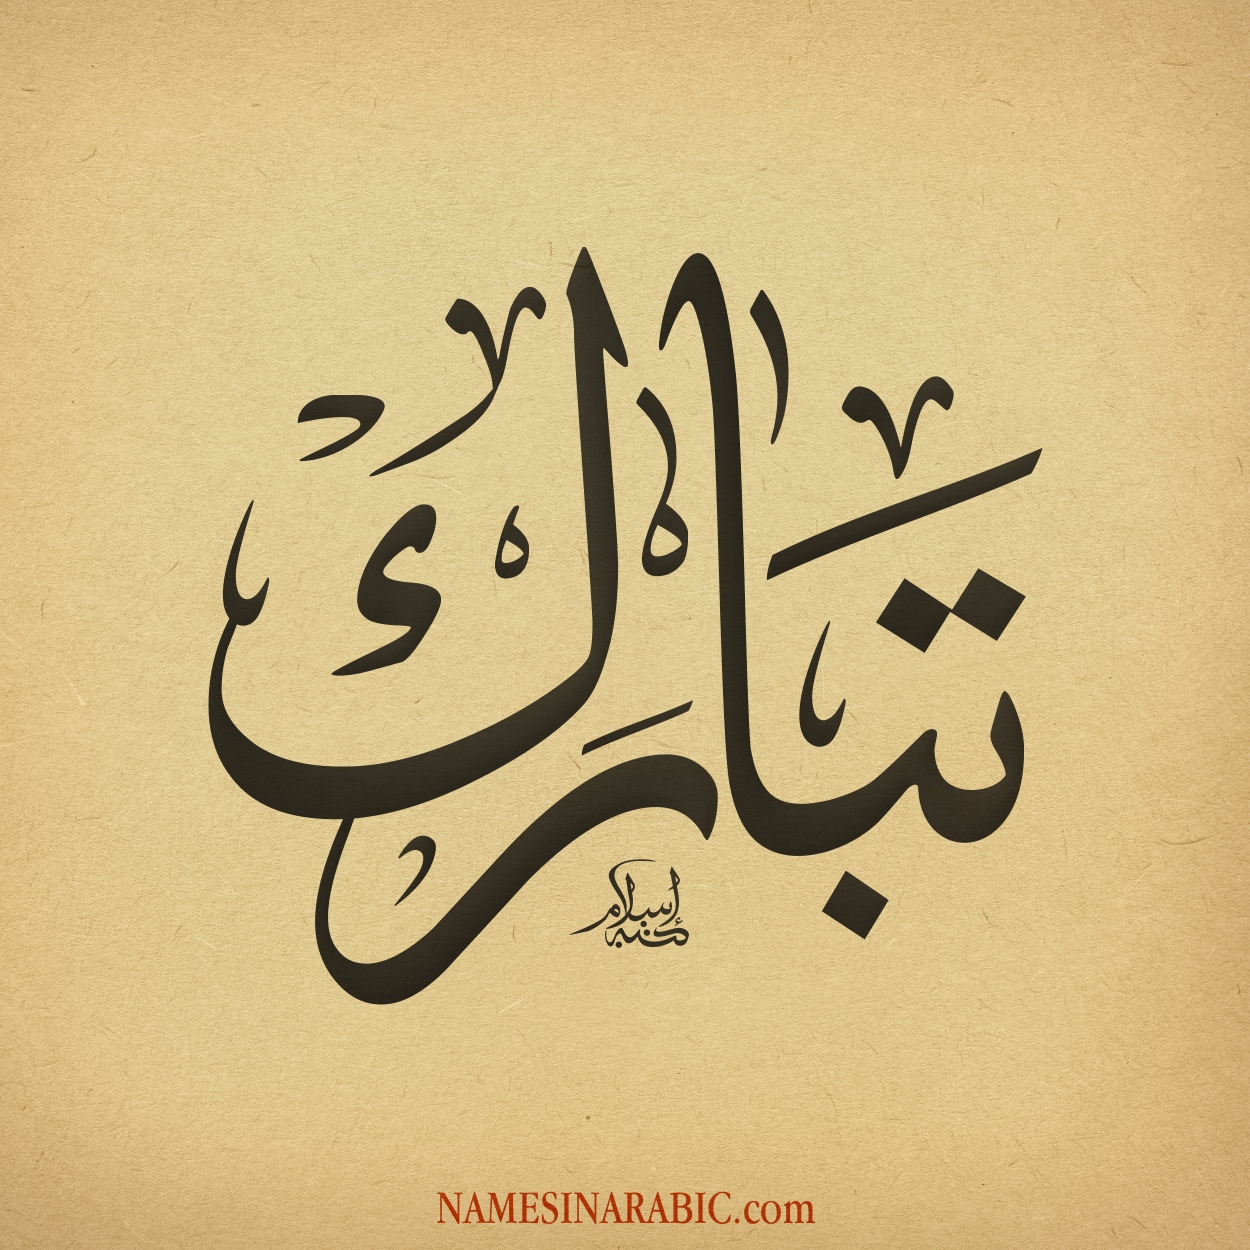 Tabarak-Name-in-Arabic-Calligraphy.jpg